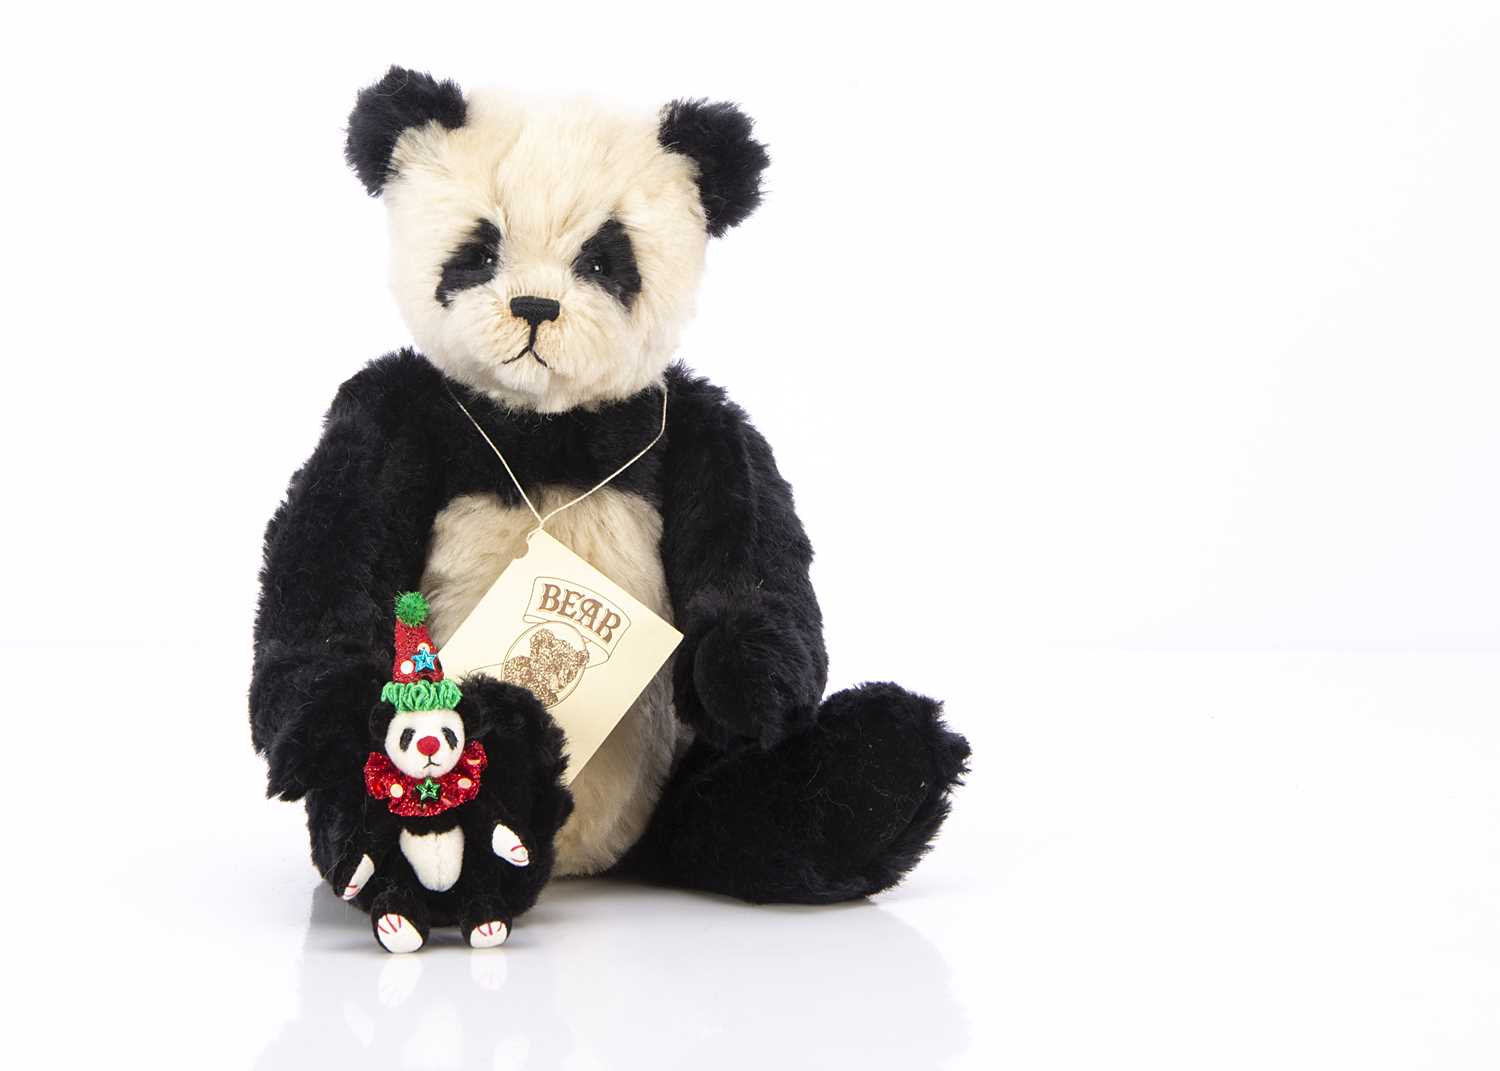 Lot 83 - A Bear Bits Portl Panda limited edition artist teddy bear